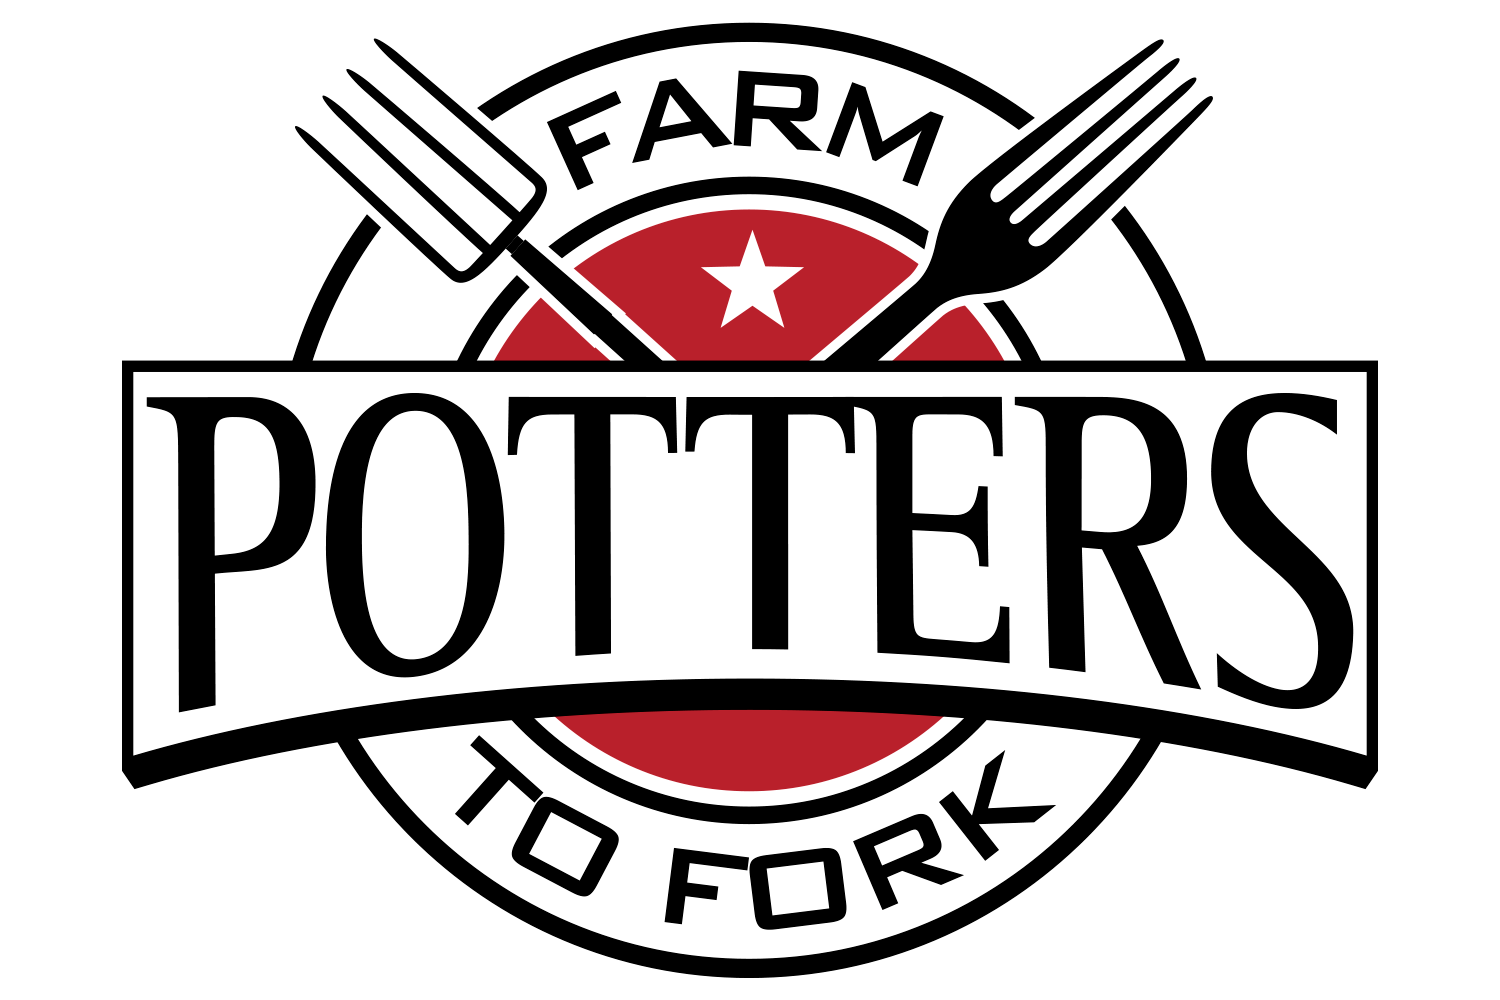 Potters Fork to Farm BruBag League